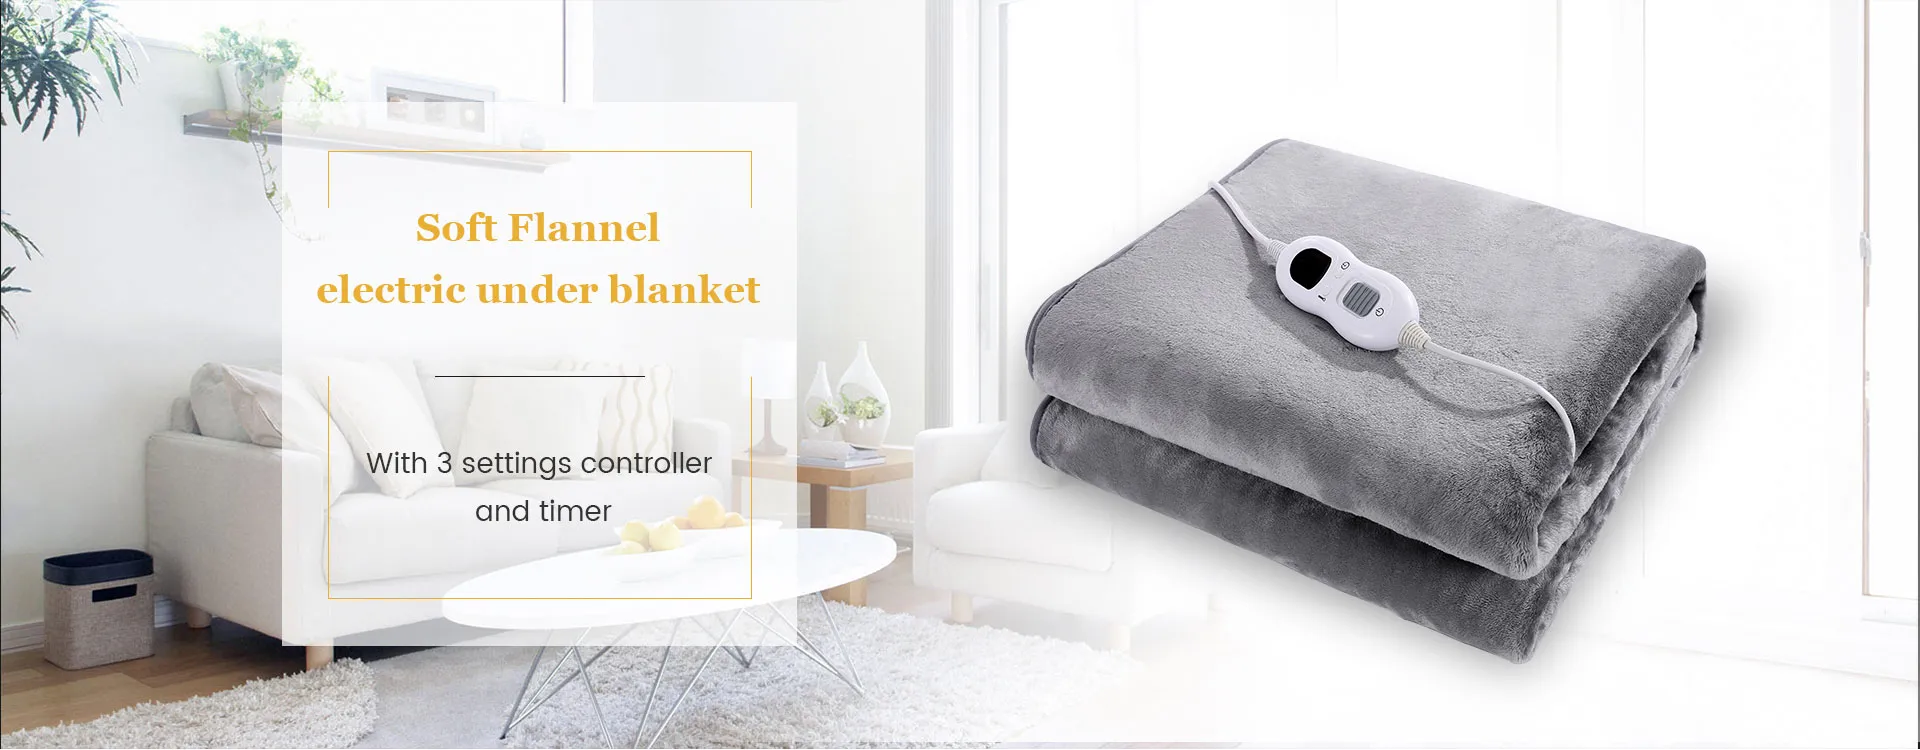 Soft Flannel electric under blanket